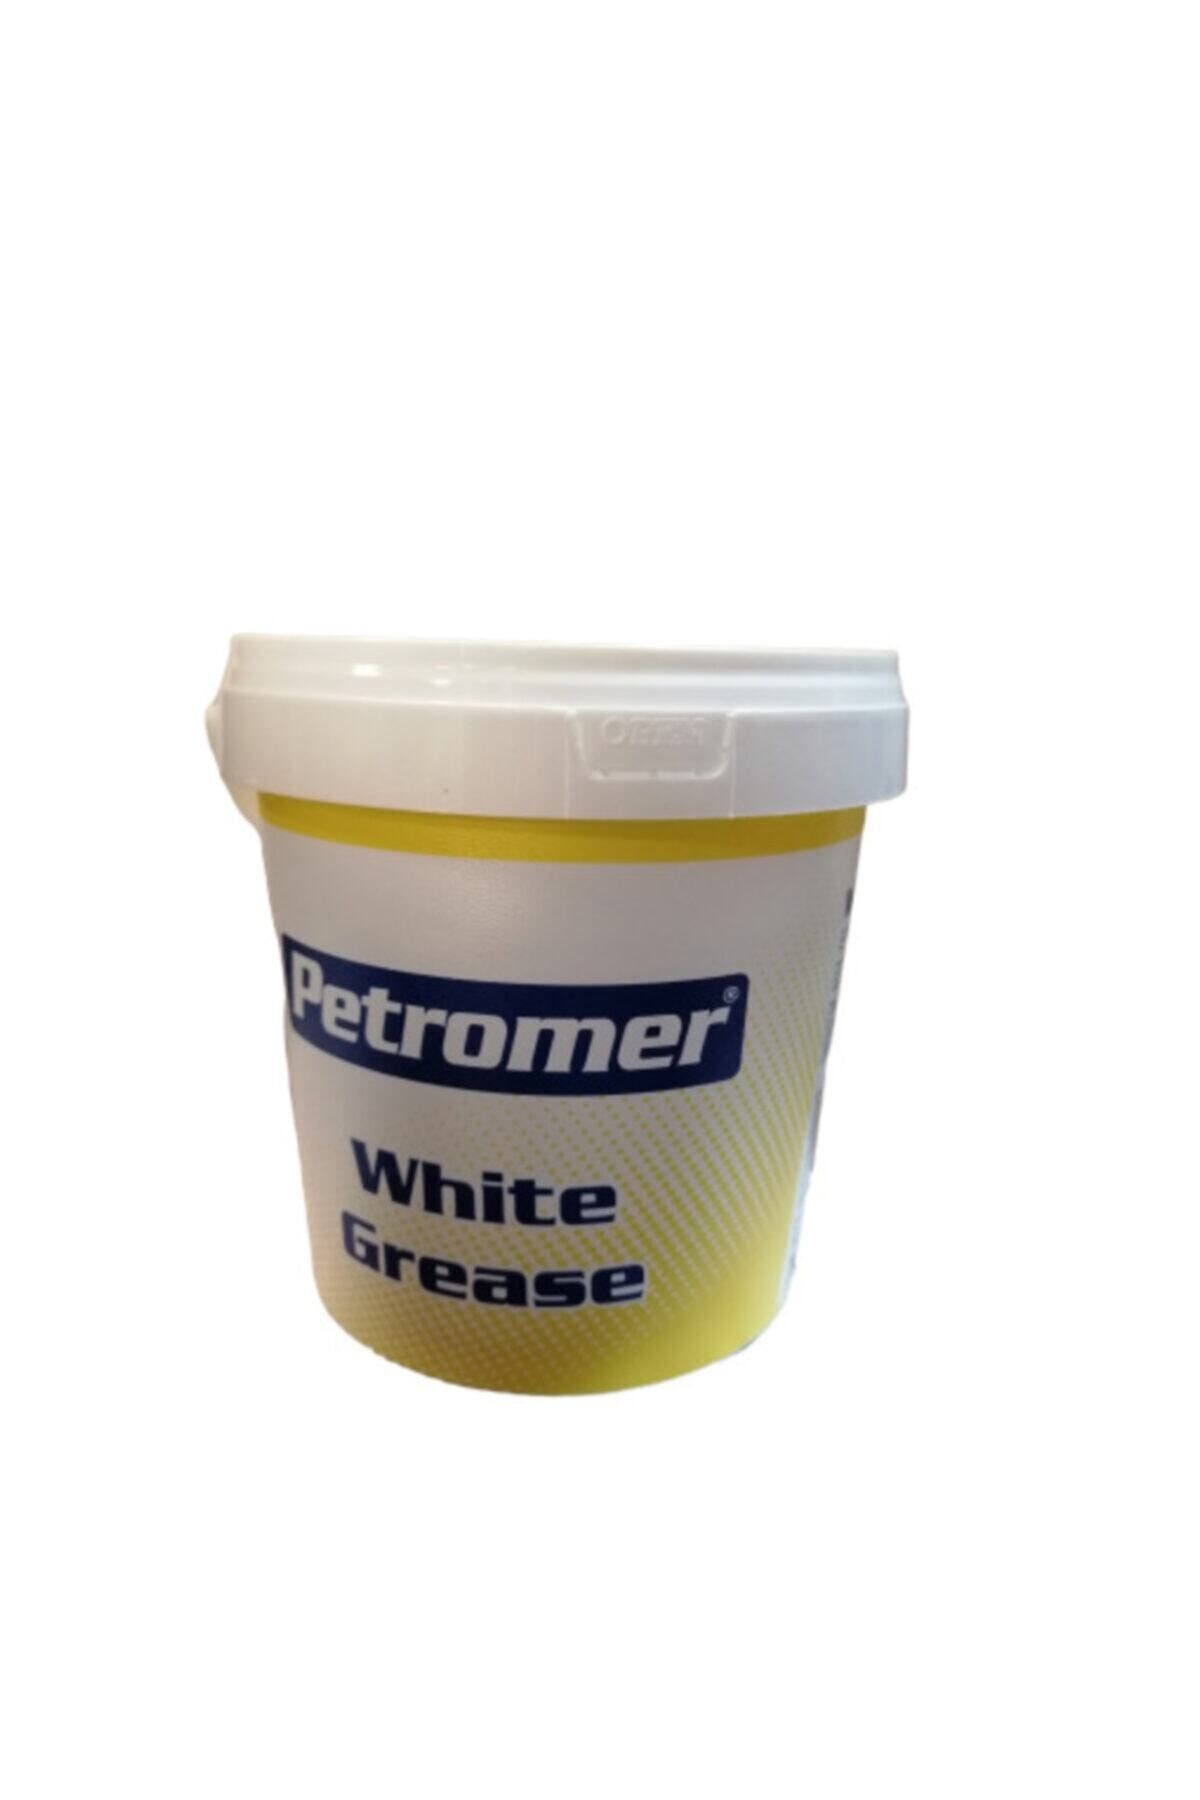 Petromax Petromer Beyaz Gres Yağı 1kg Tırpan Spiral Mil Yağı